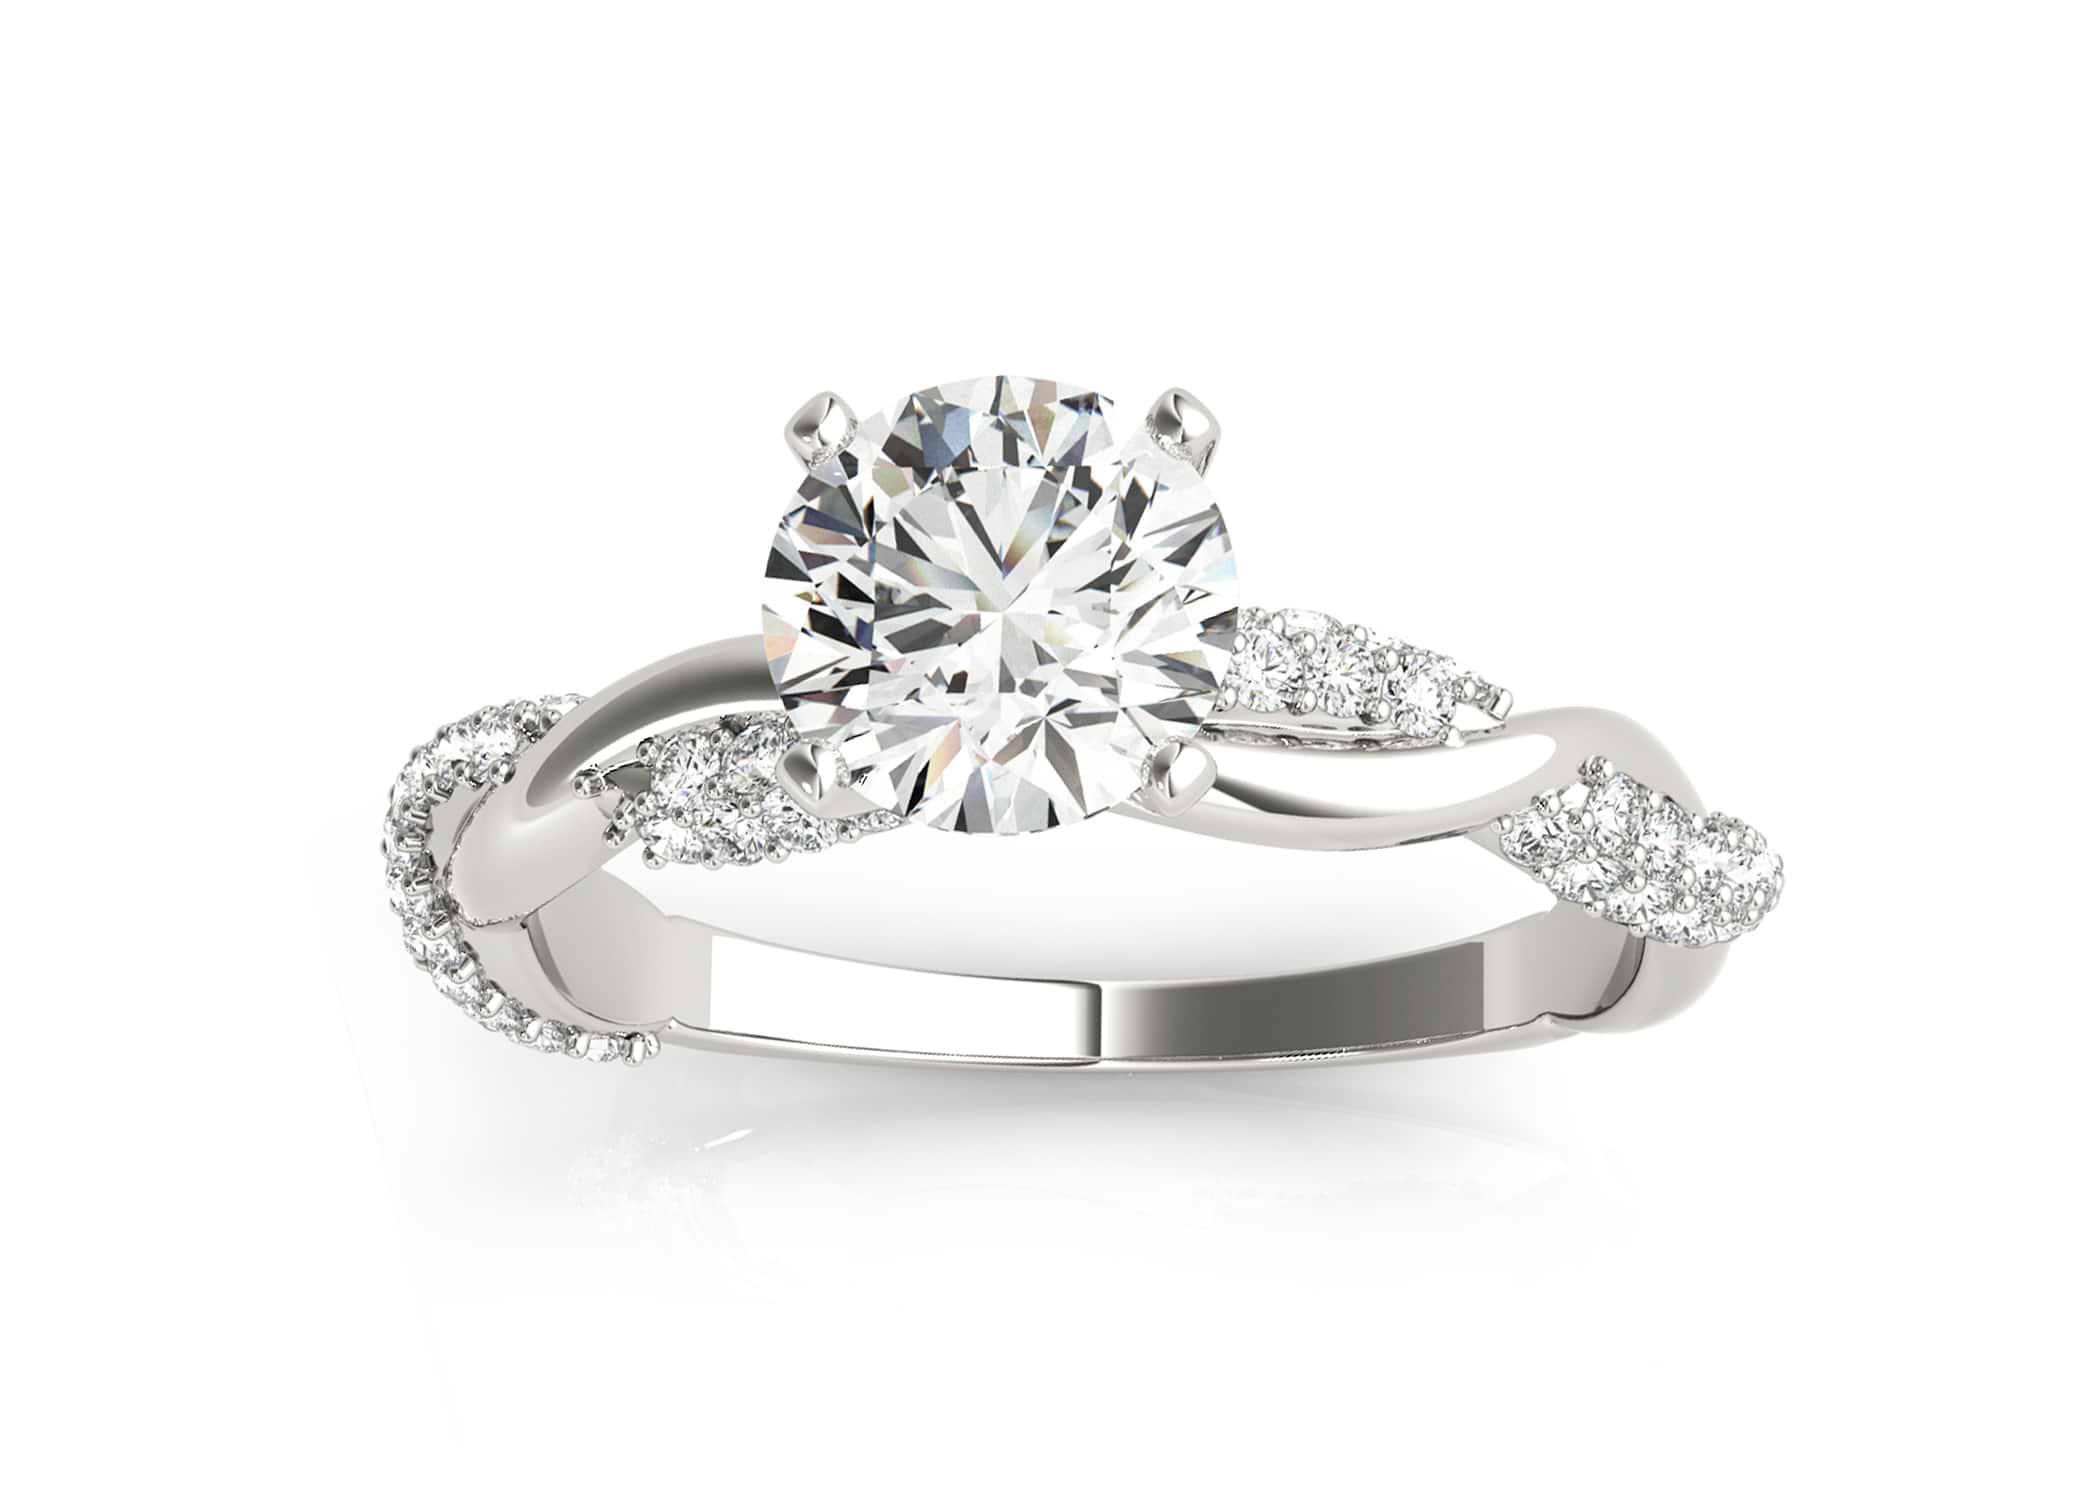 Infinity Twist Diamond Engagement Ring Setting 18k White Gold (0.40ct)